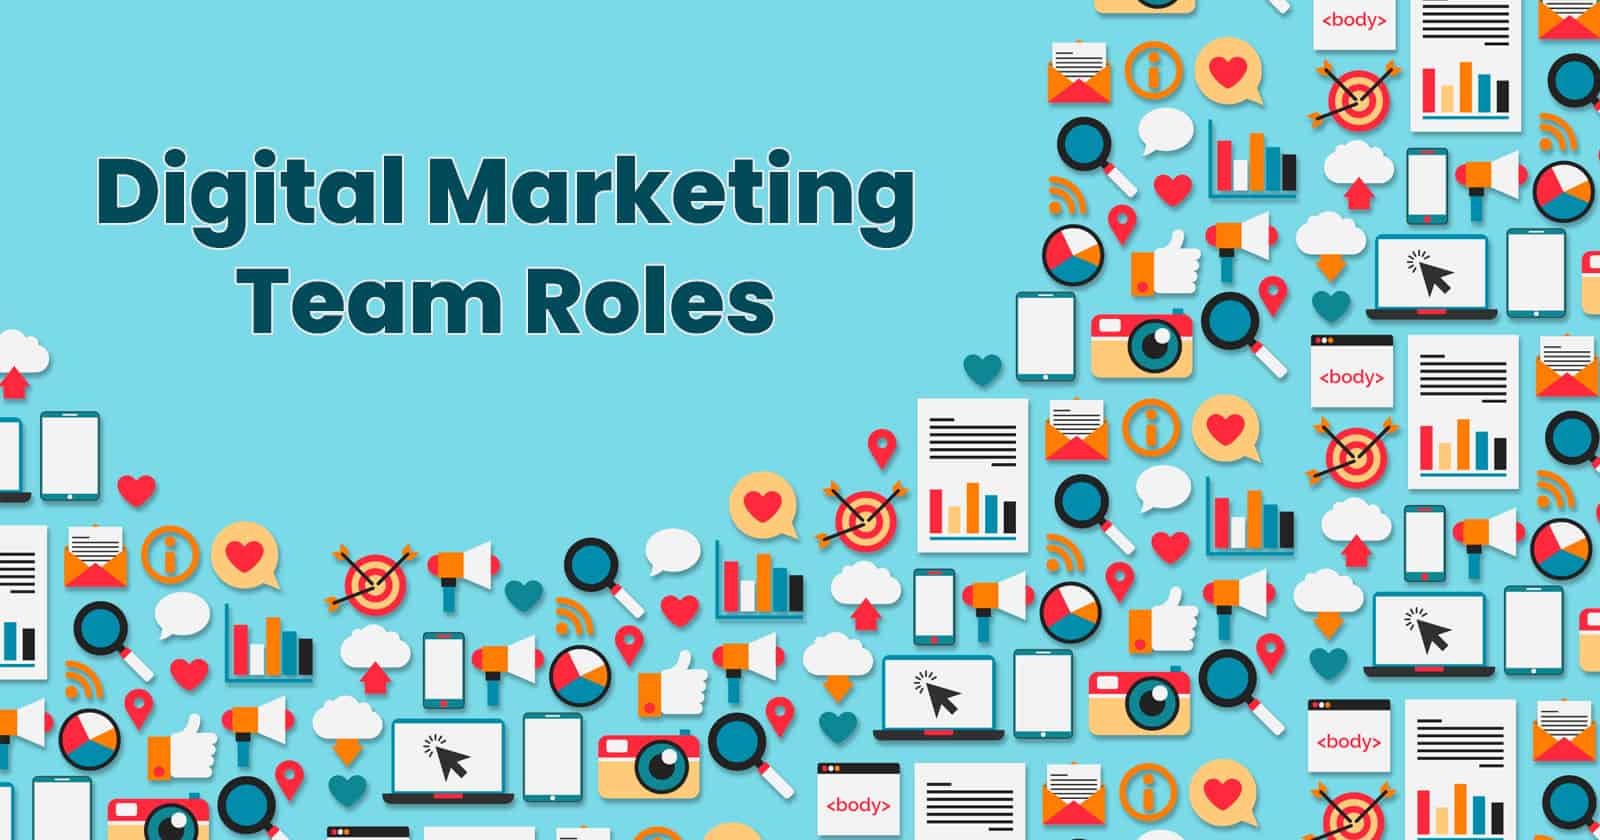 Digital Marketing Team Roles